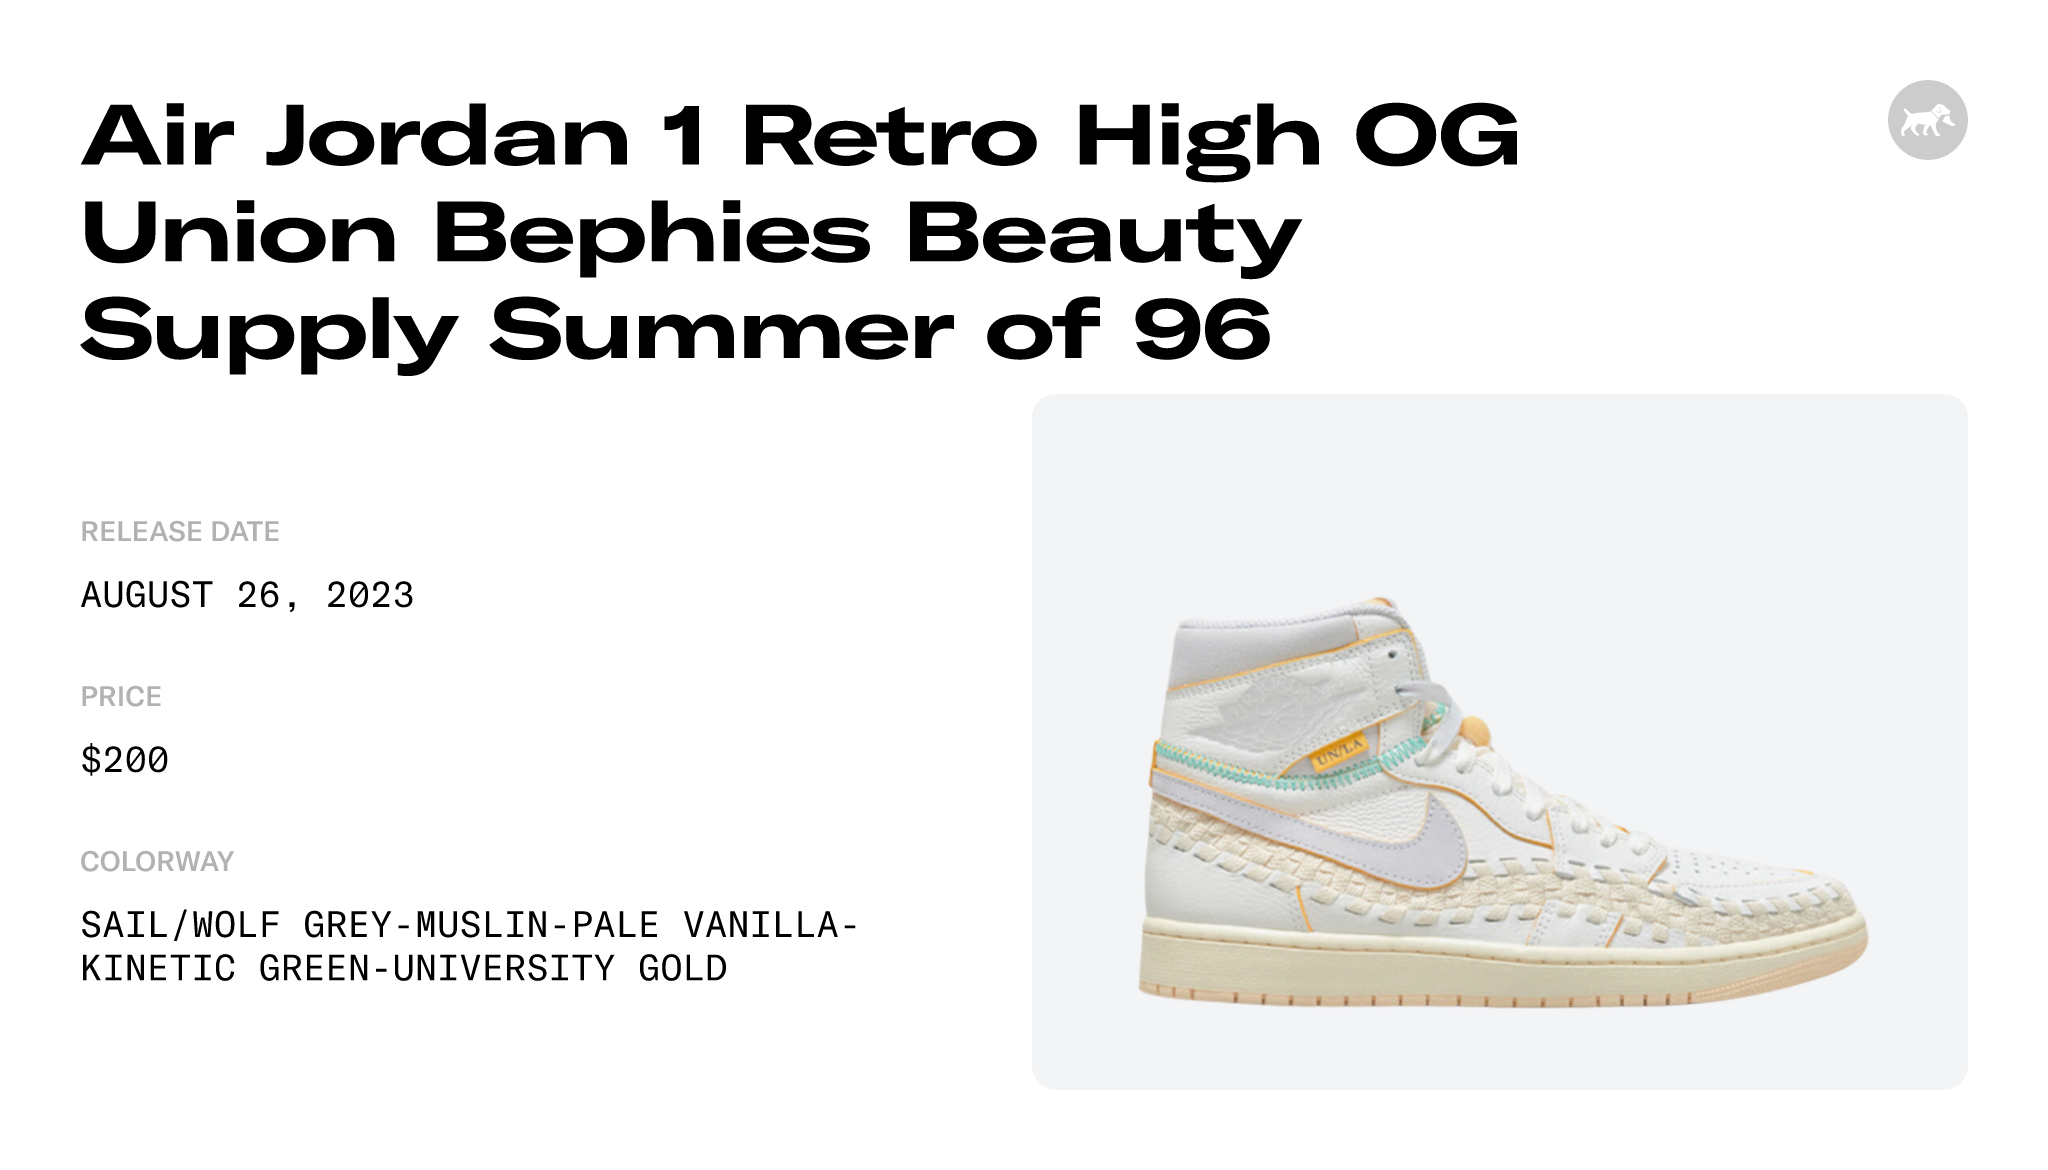 Air Jordan 1 Retro High OG Union Bephies Beauty Supply Summer of